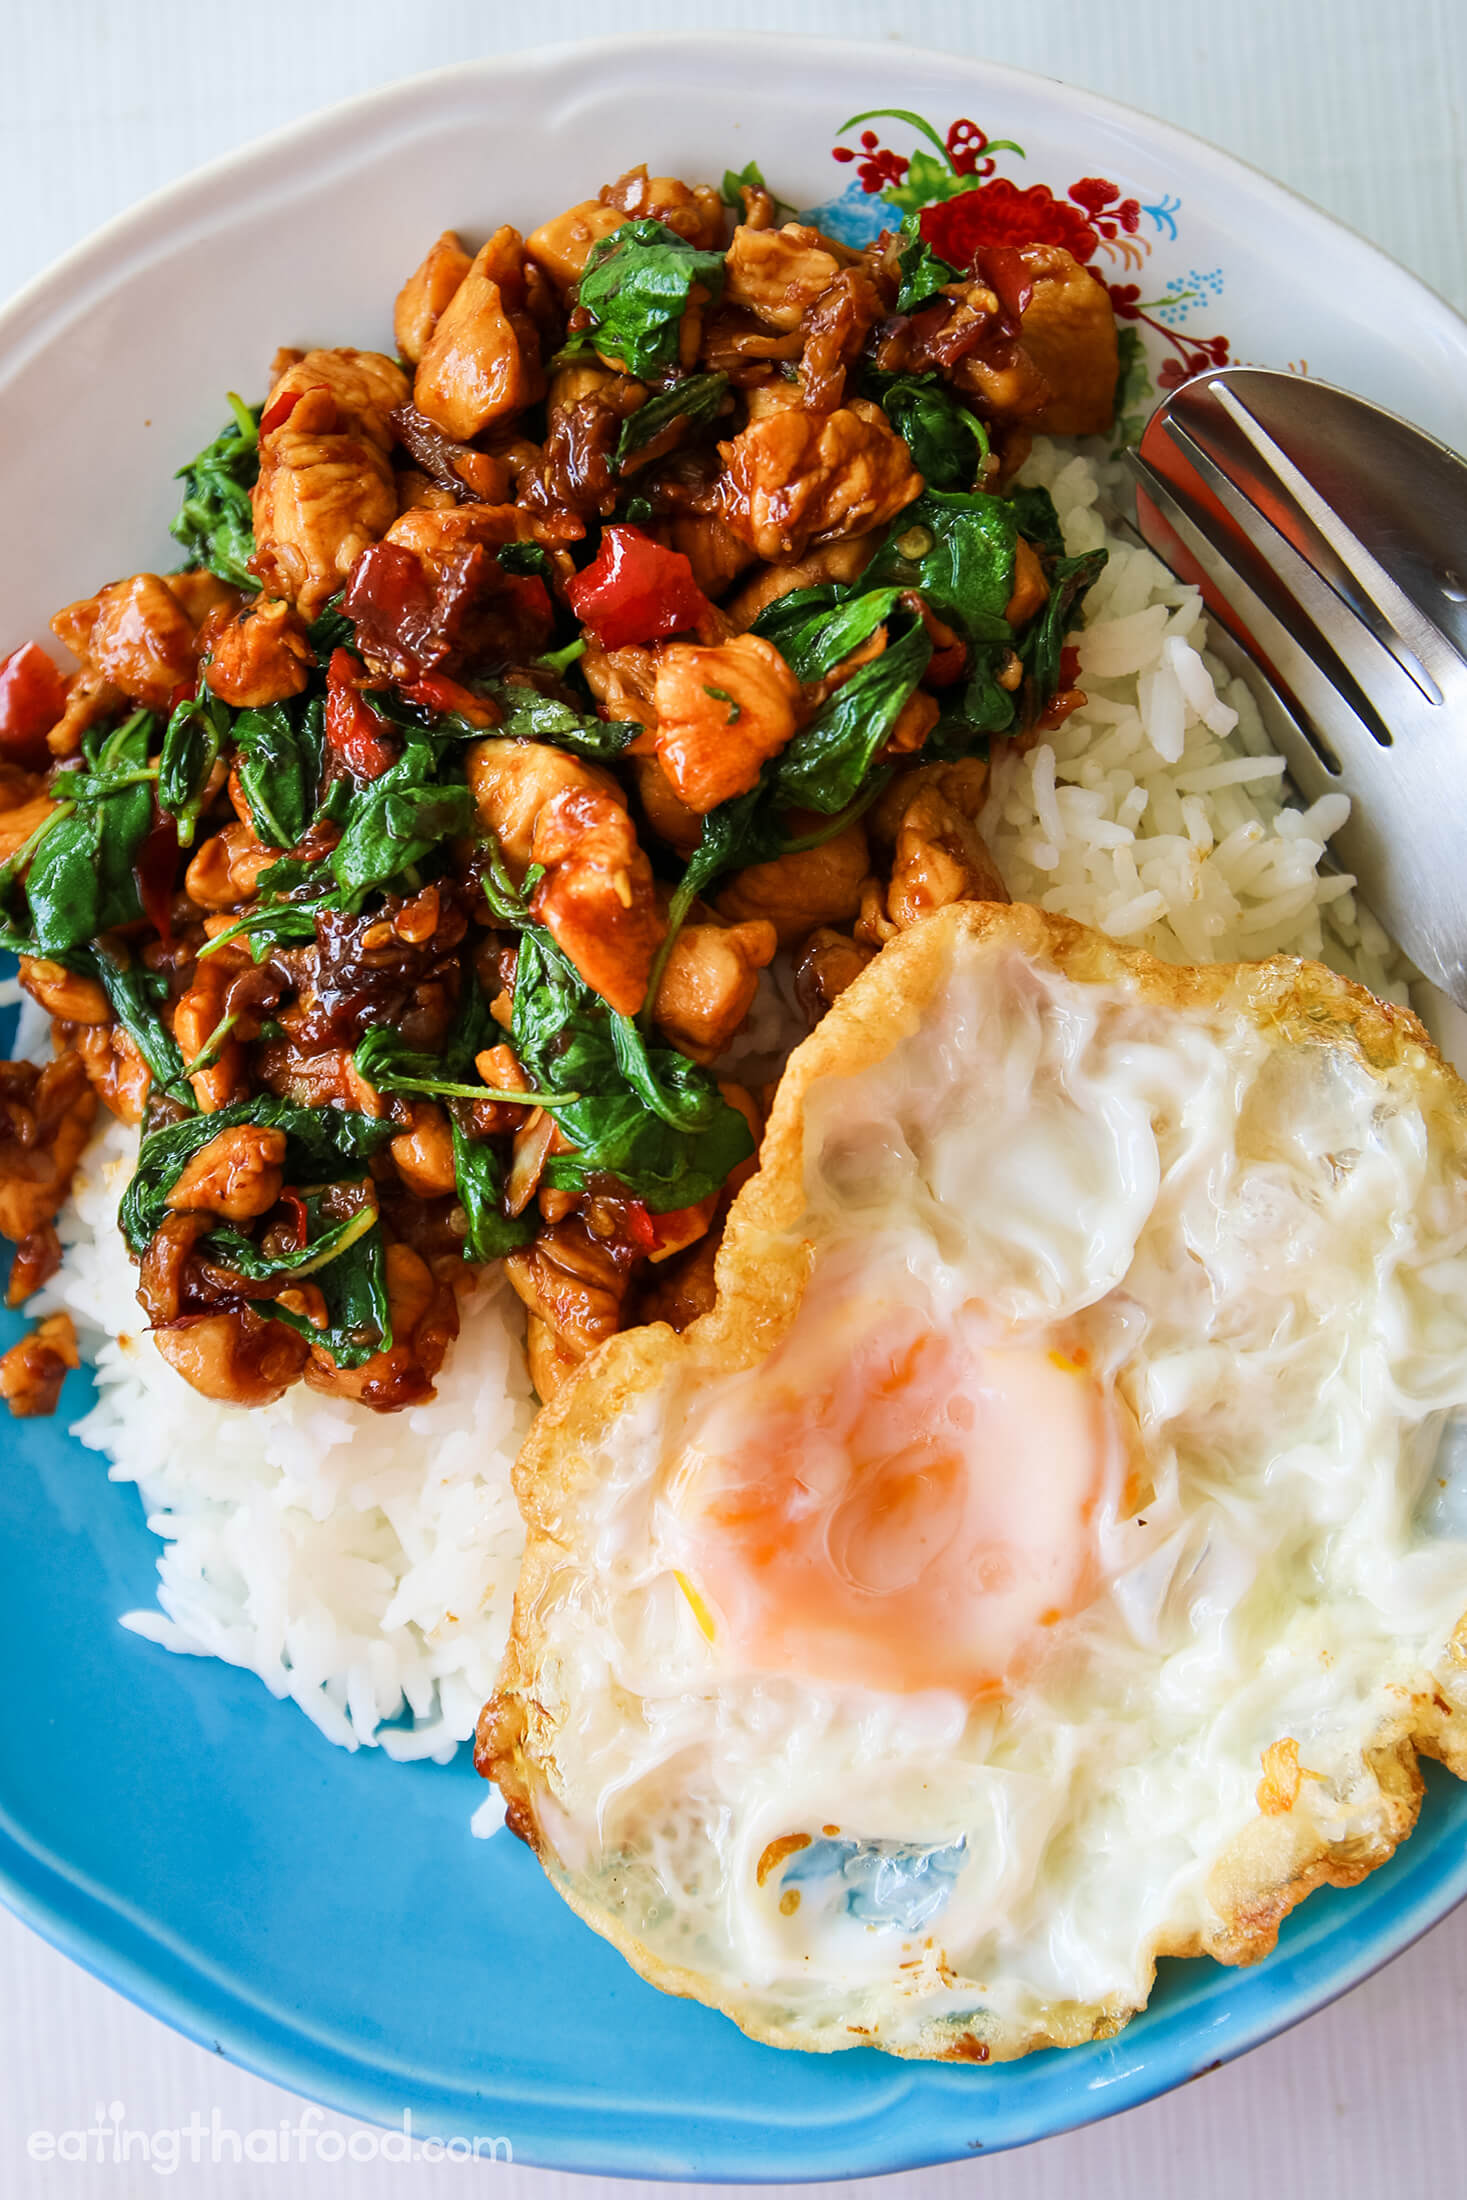 Thai recipes - Thai Street Food, Restaurants, and Recipes ...